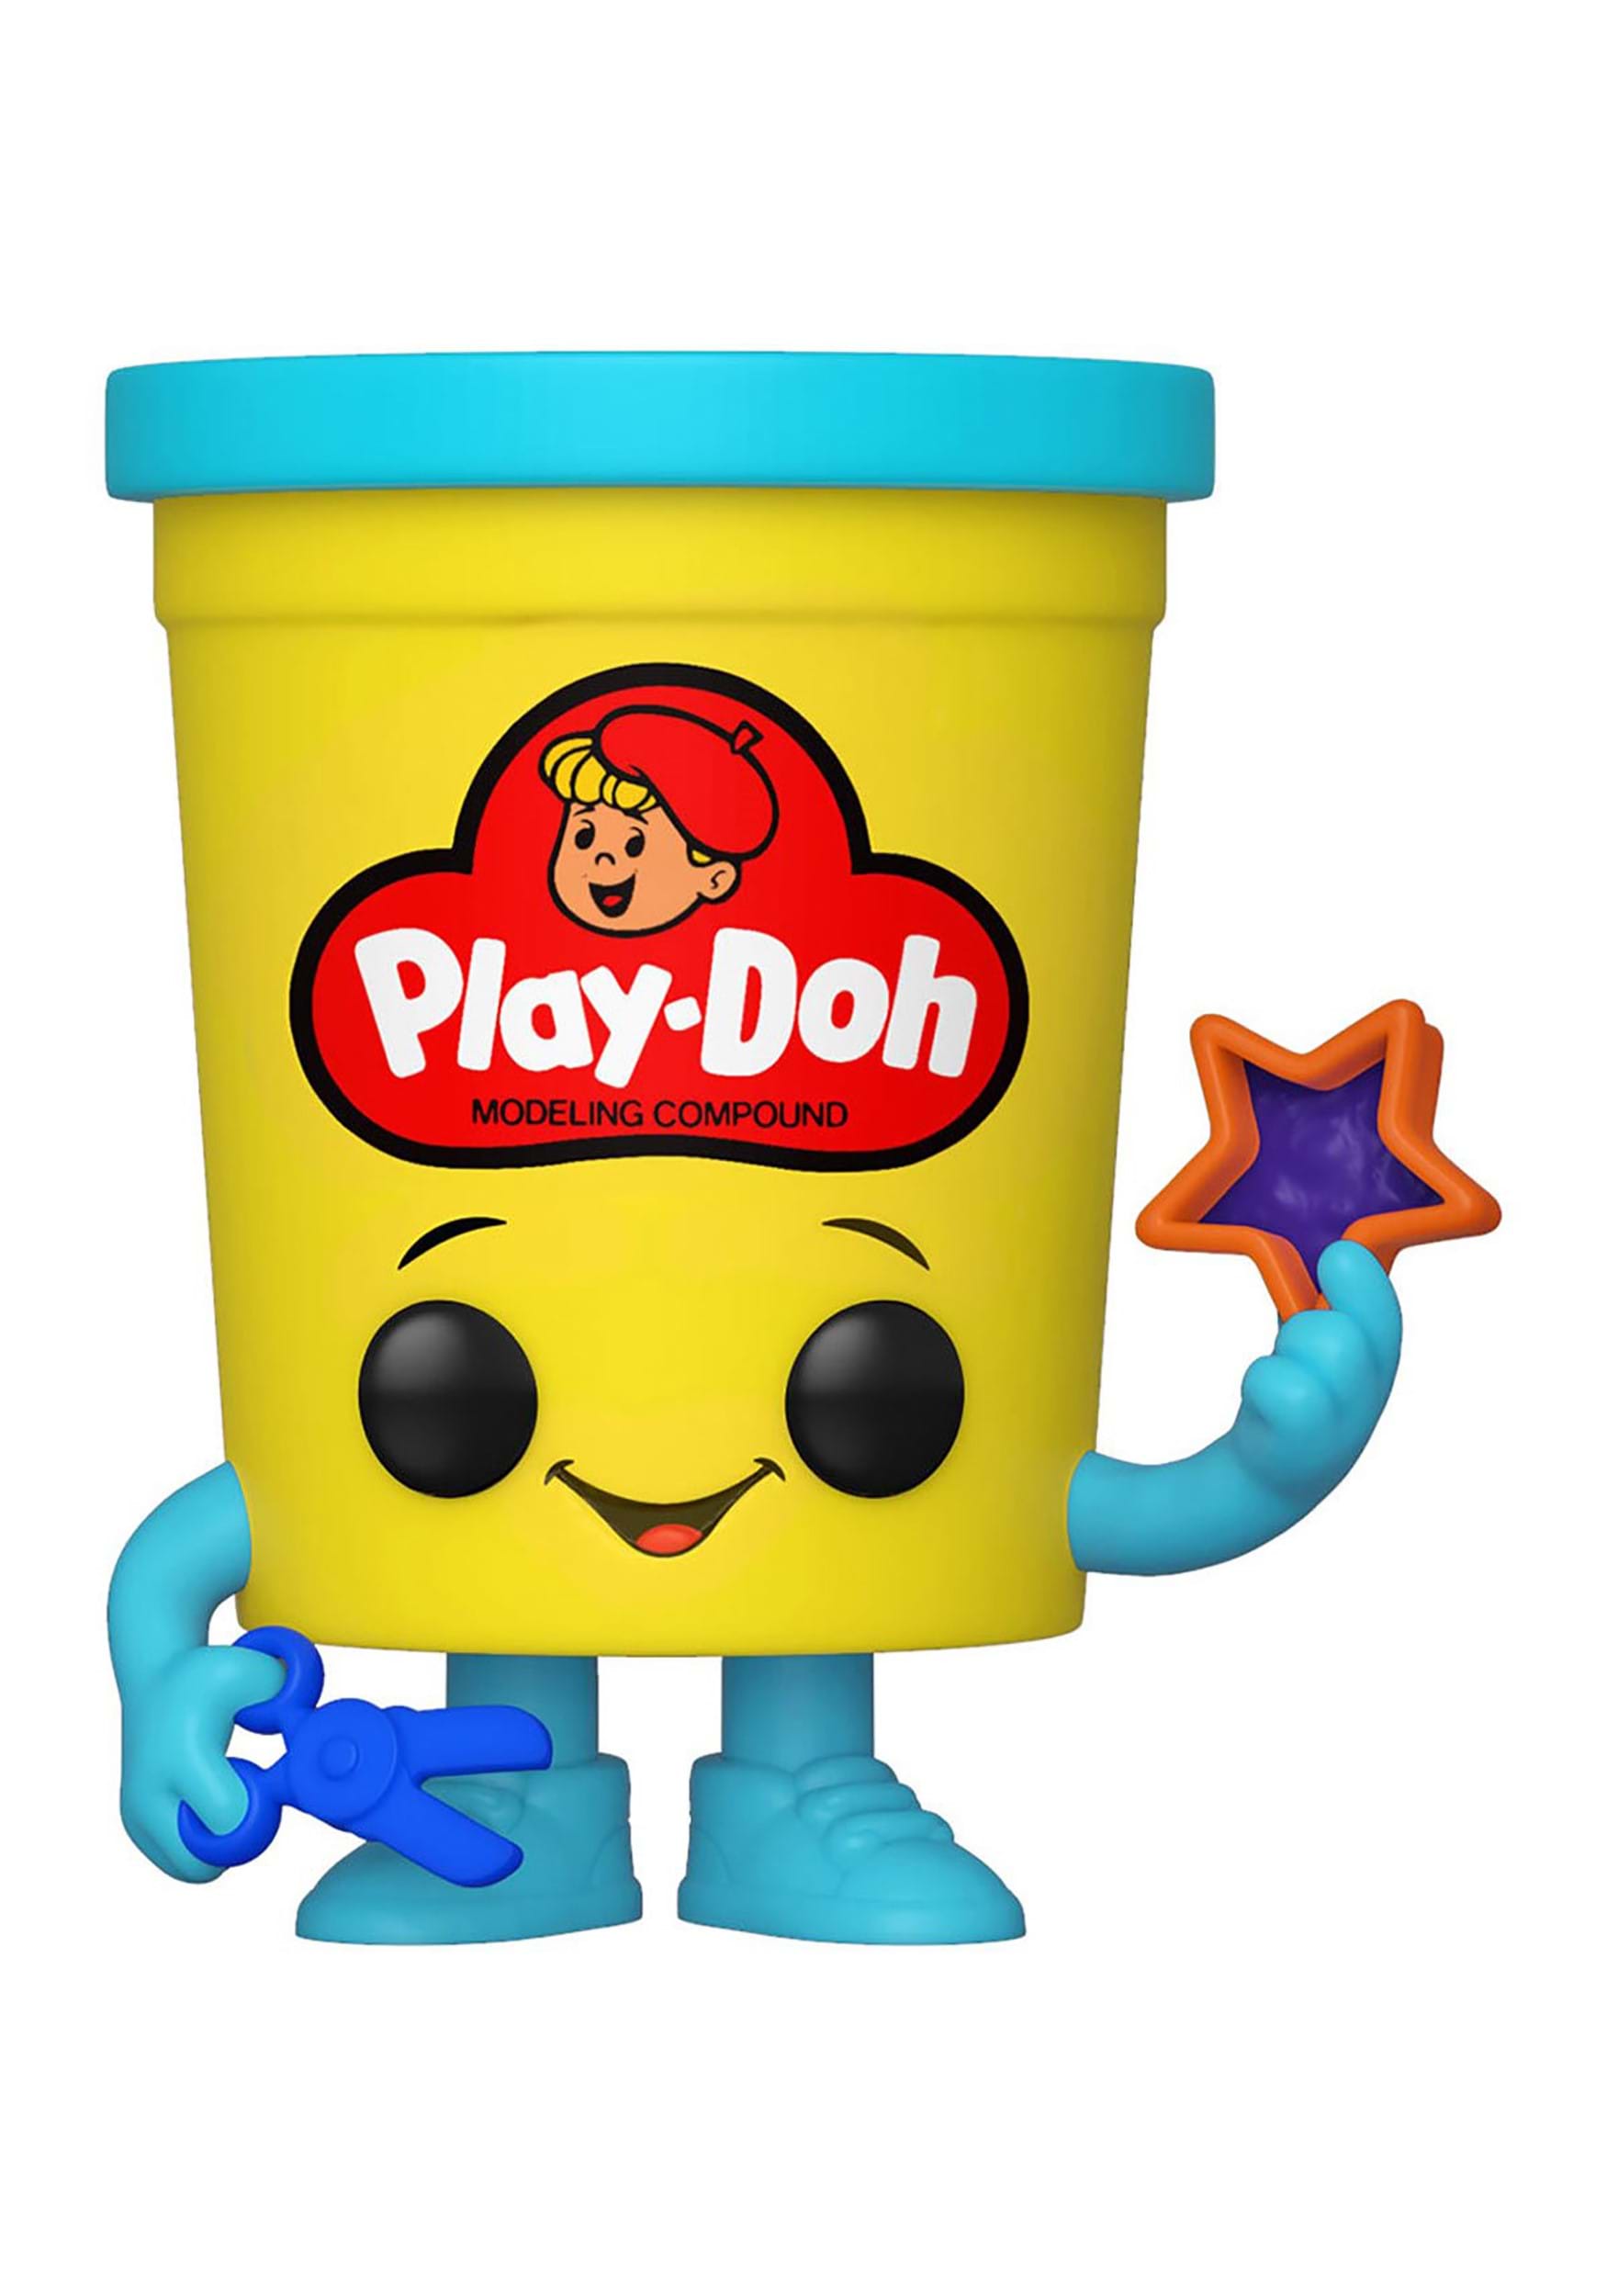 Funko POP Vinyl: Play-Doh- Play-Doh Container Figure